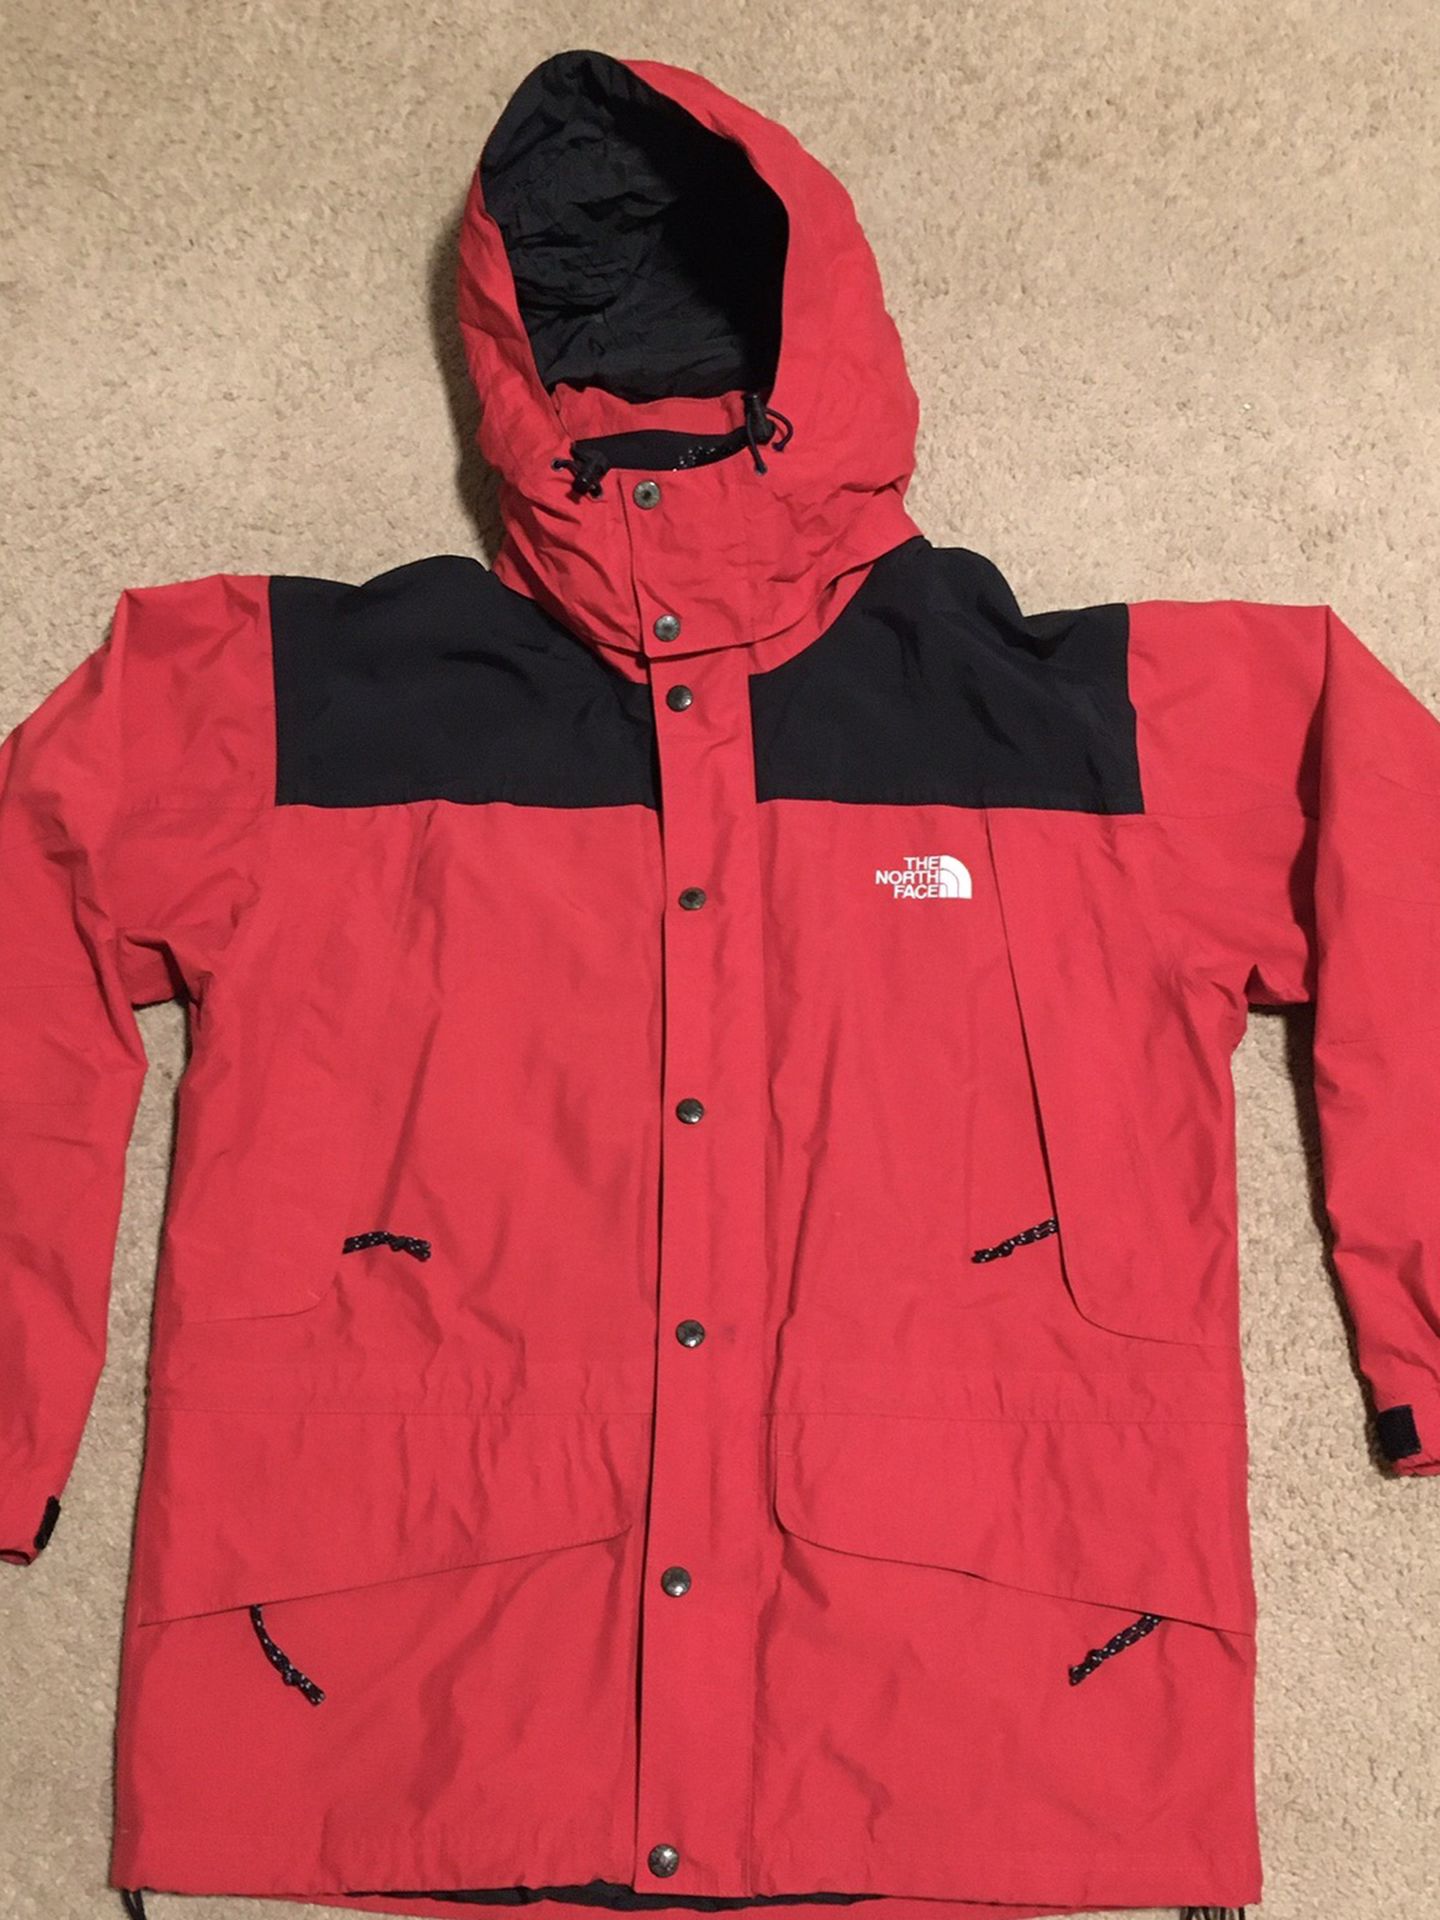 Men’s North Face Jacket & Matching Fleece - Size M